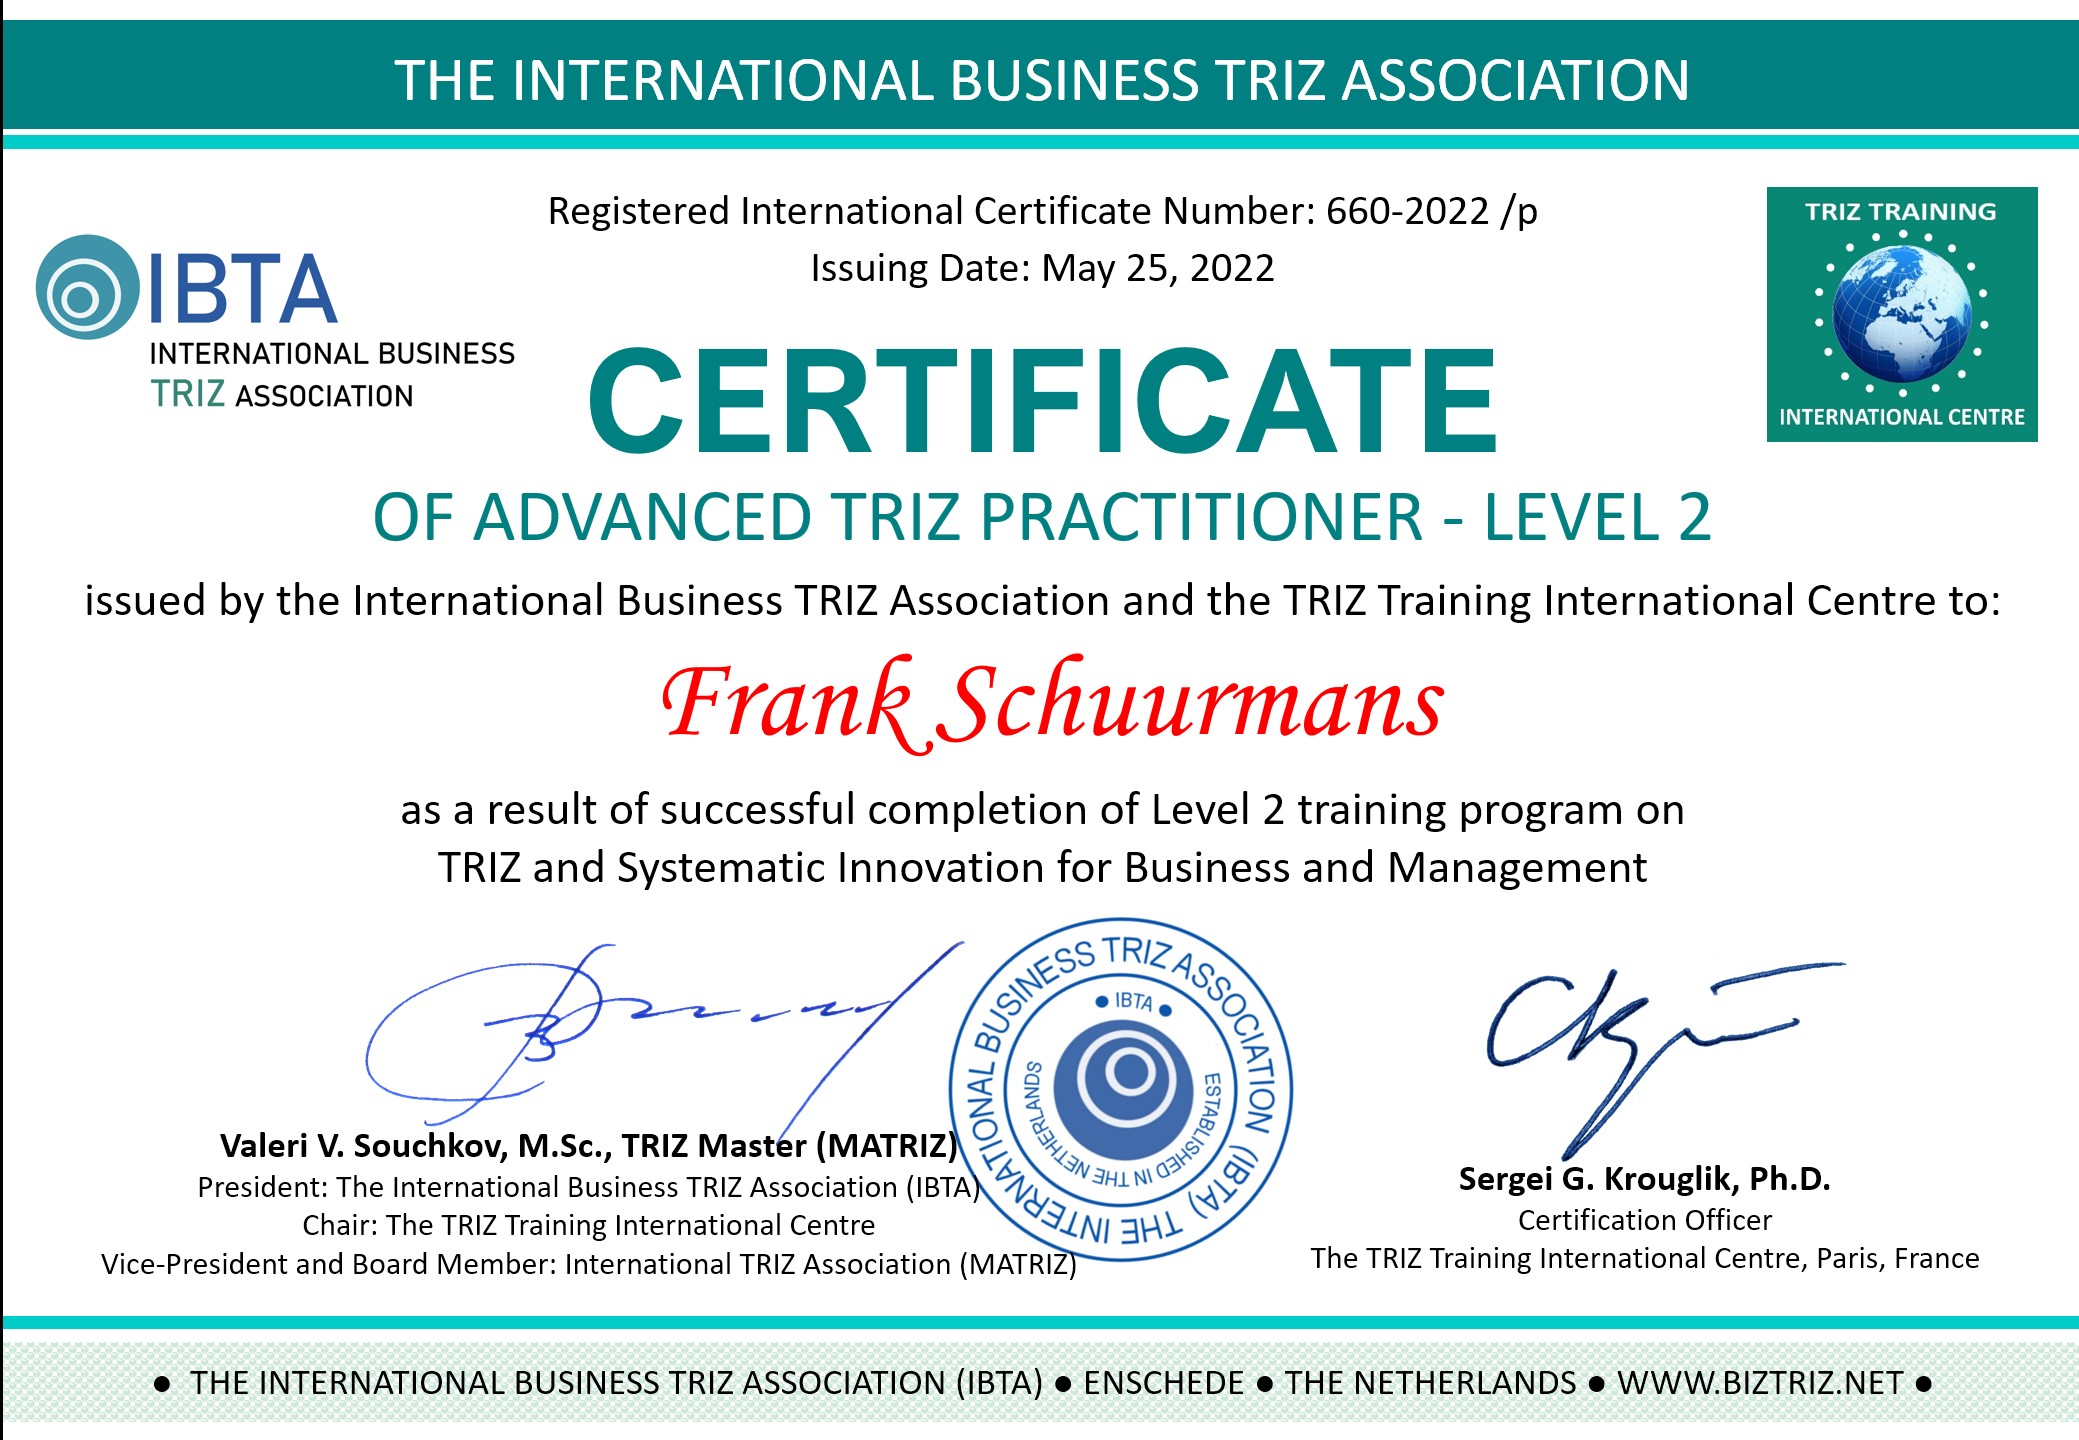 PowerPoint Slide Show IBTA Certificate 660 EN Frank Schuurmans 2.pptx 11 06 2023 12 16 40